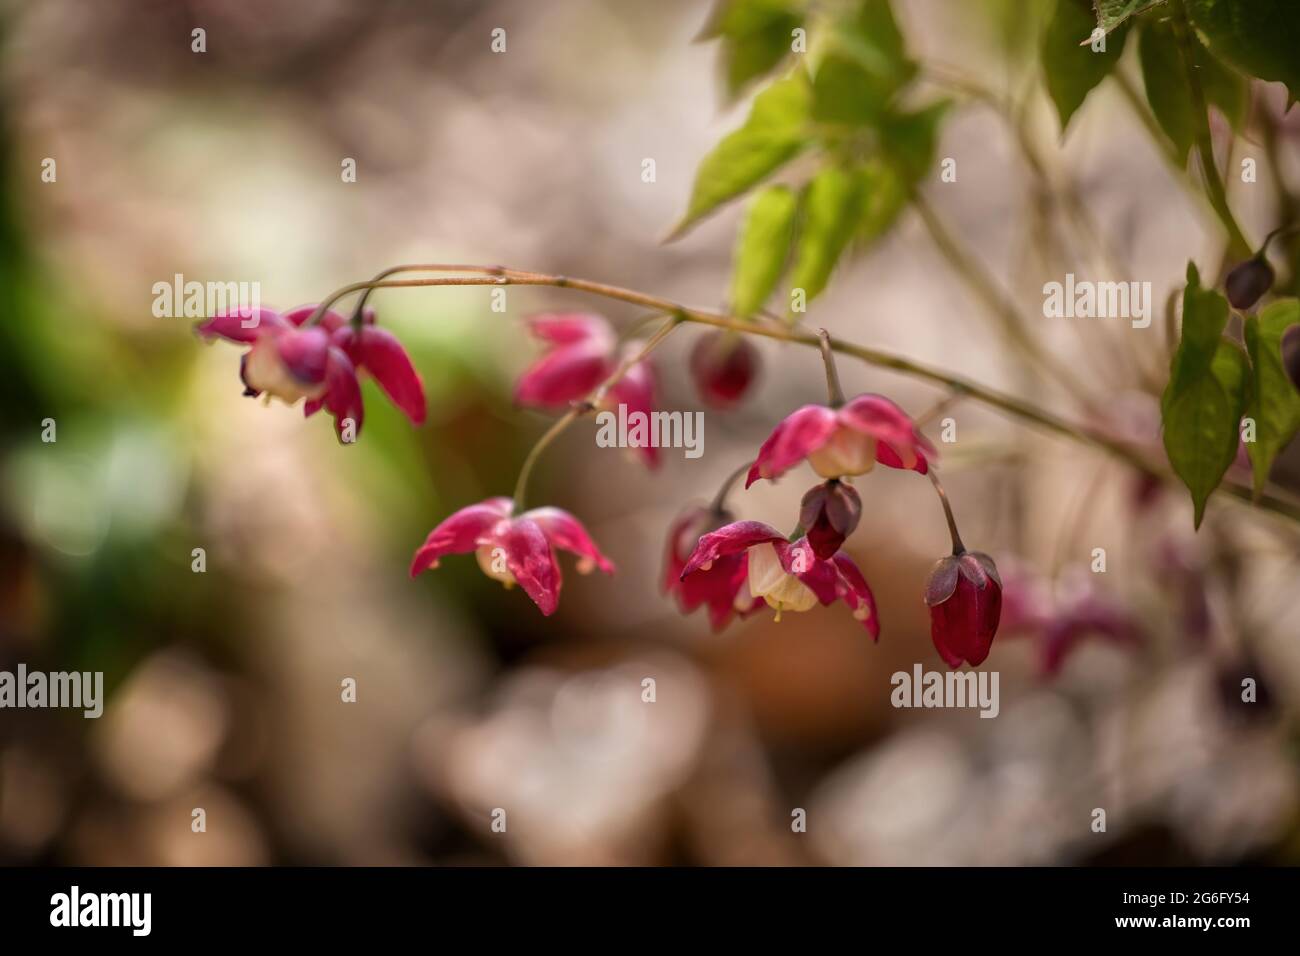 Epimedium Younga ROSEUM flowers, family: Berberidaceae, selective focus, shallow depth of field Stock Photo